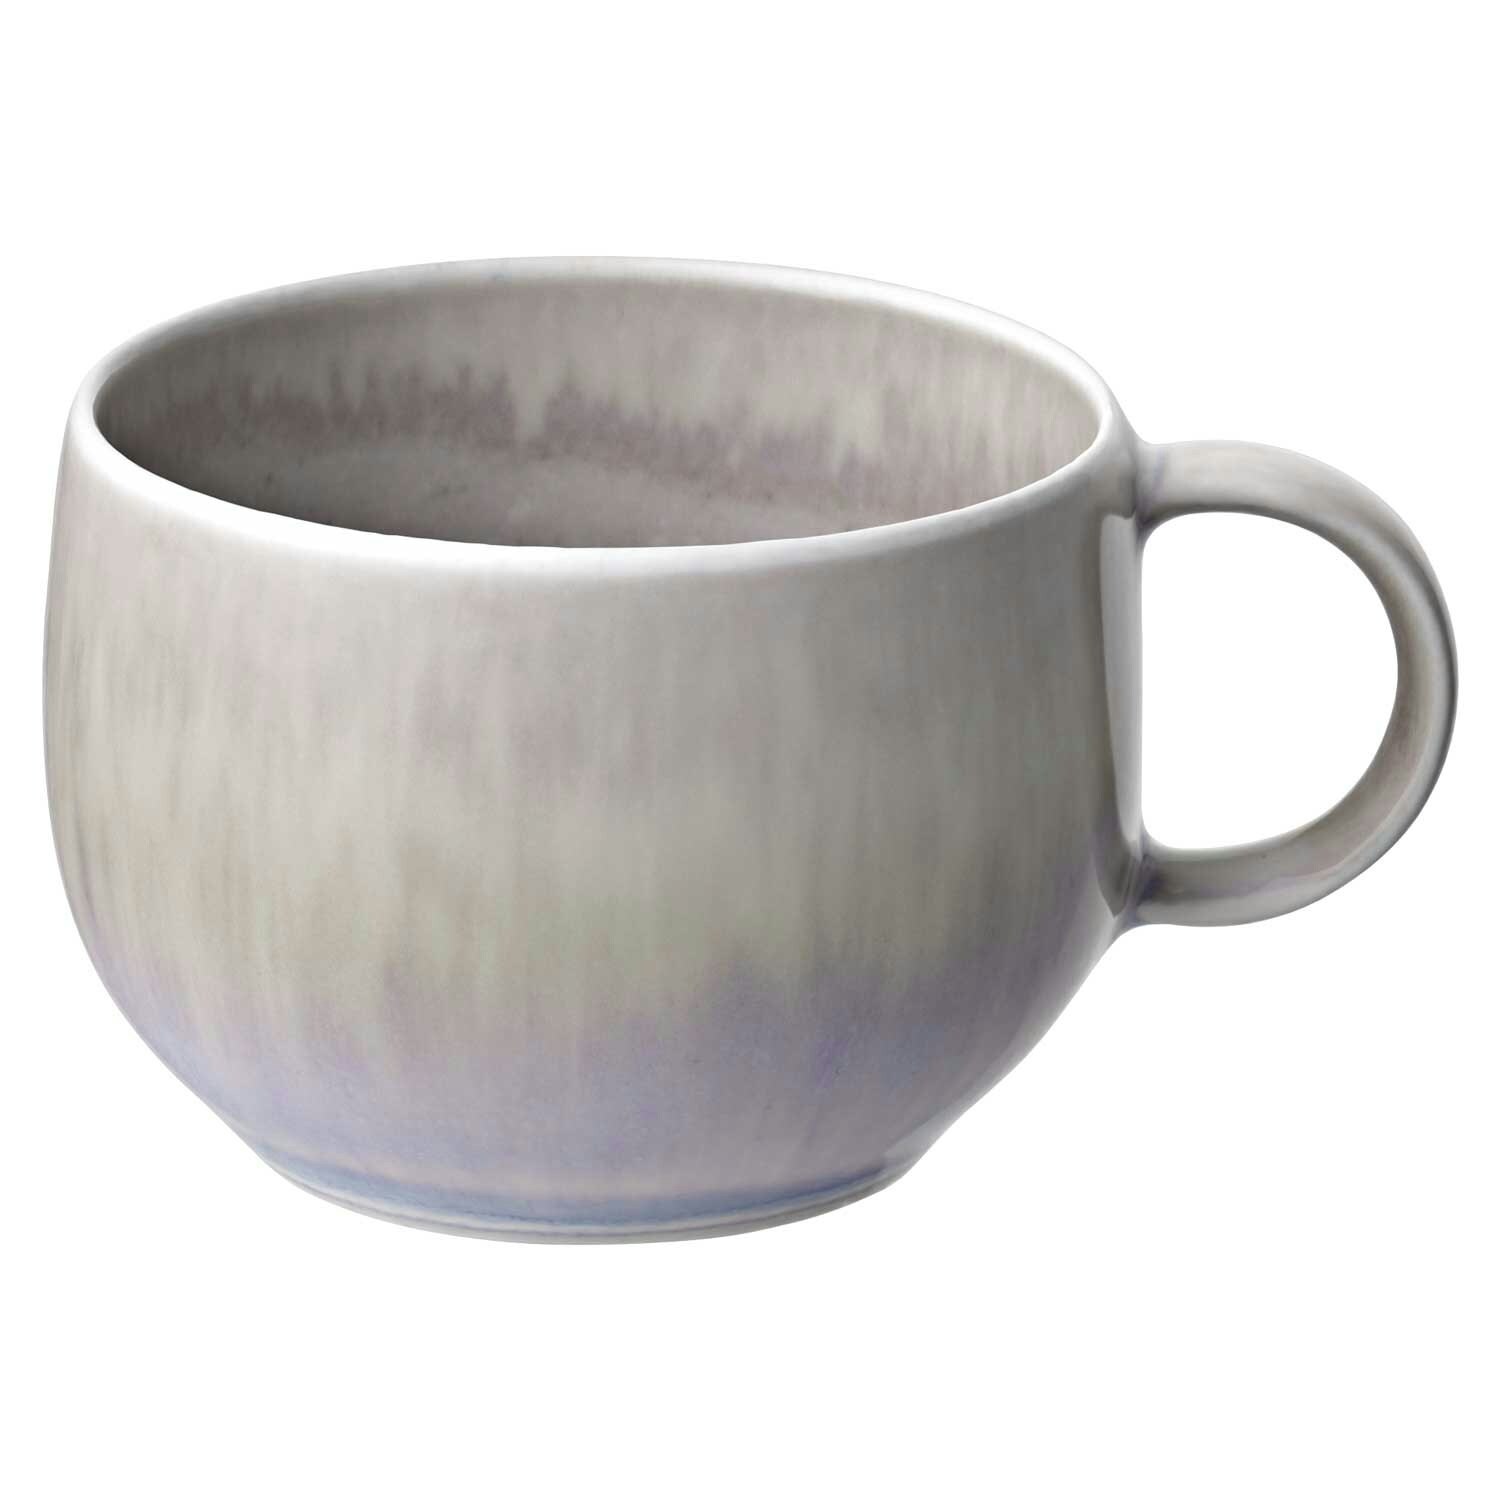 https://royaldesign.com/image/2/villeroy-boch-perlemor-espresso-cup-6-cl-1